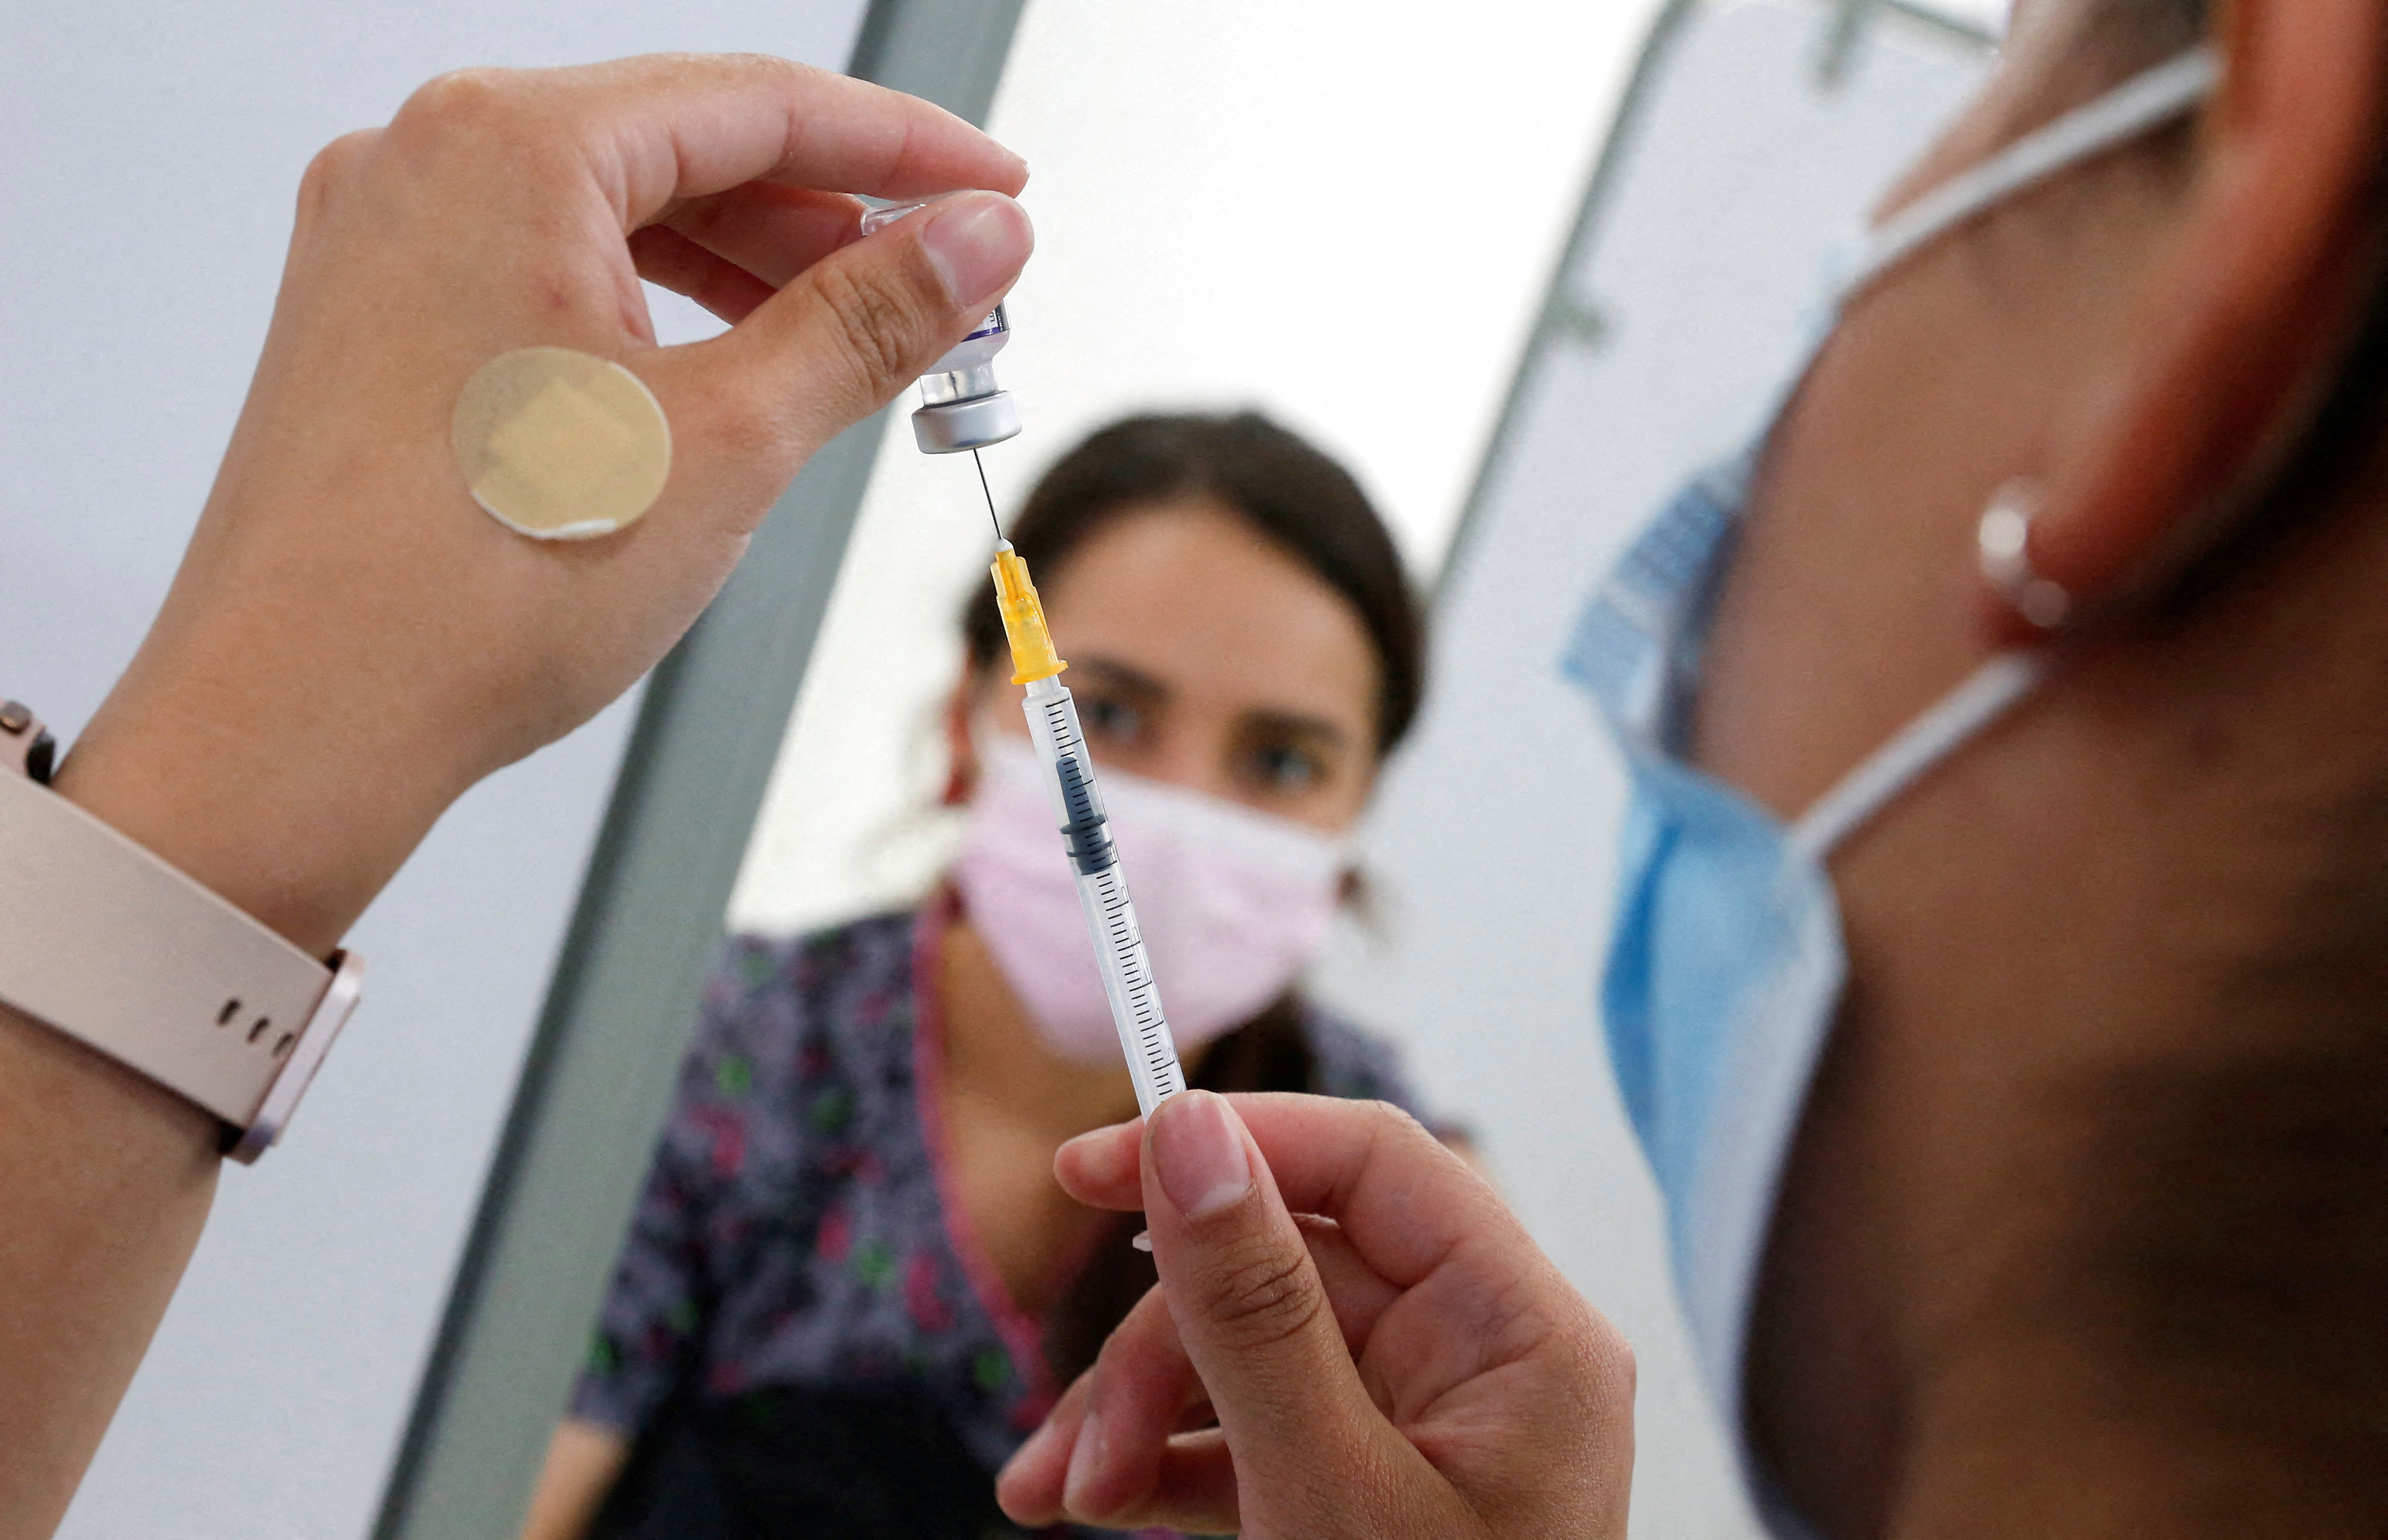 A healthcare worker prepares a vaccine against the coronavirus disease (COVID-19) at a mobile vaccine clinic, in Valparaiso, Chile, January 3, 2022. REUTERS/Rodrigo Garrido